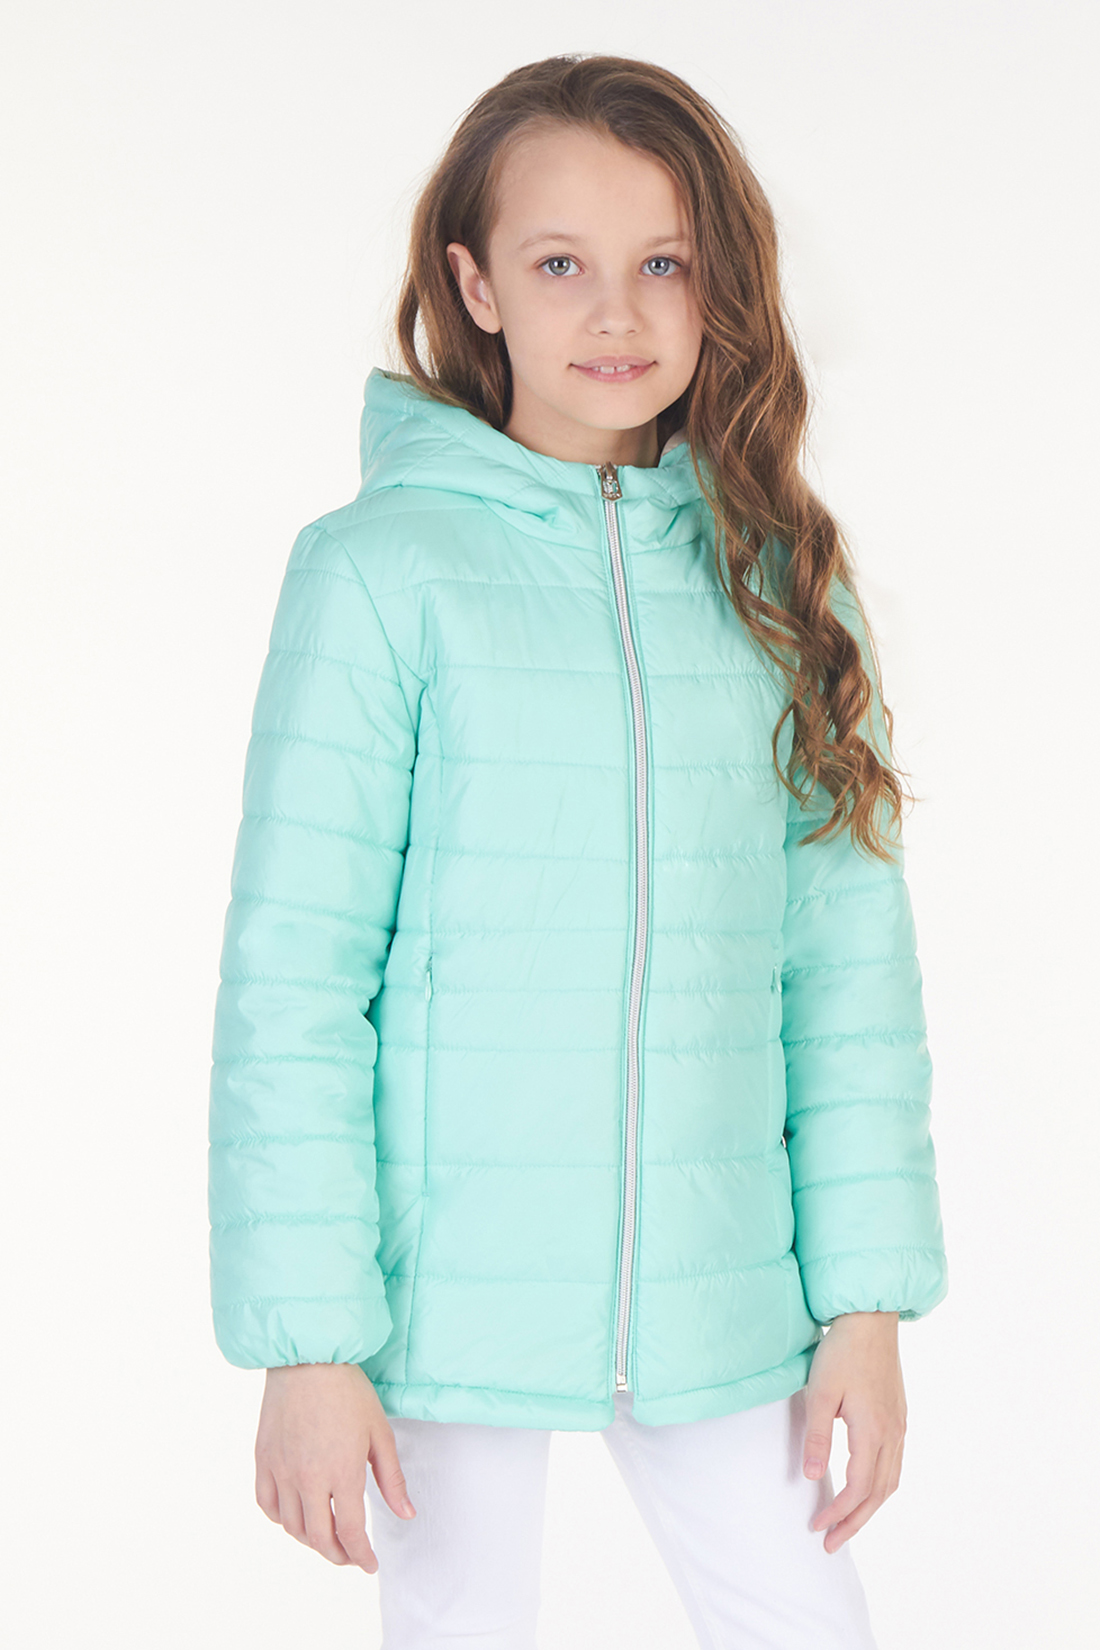 Куртка для девочки (арт. baon BJ038001), размер 158, цвет зеленый Куртка для девочки (арт. baon BJ038001) - фото 1